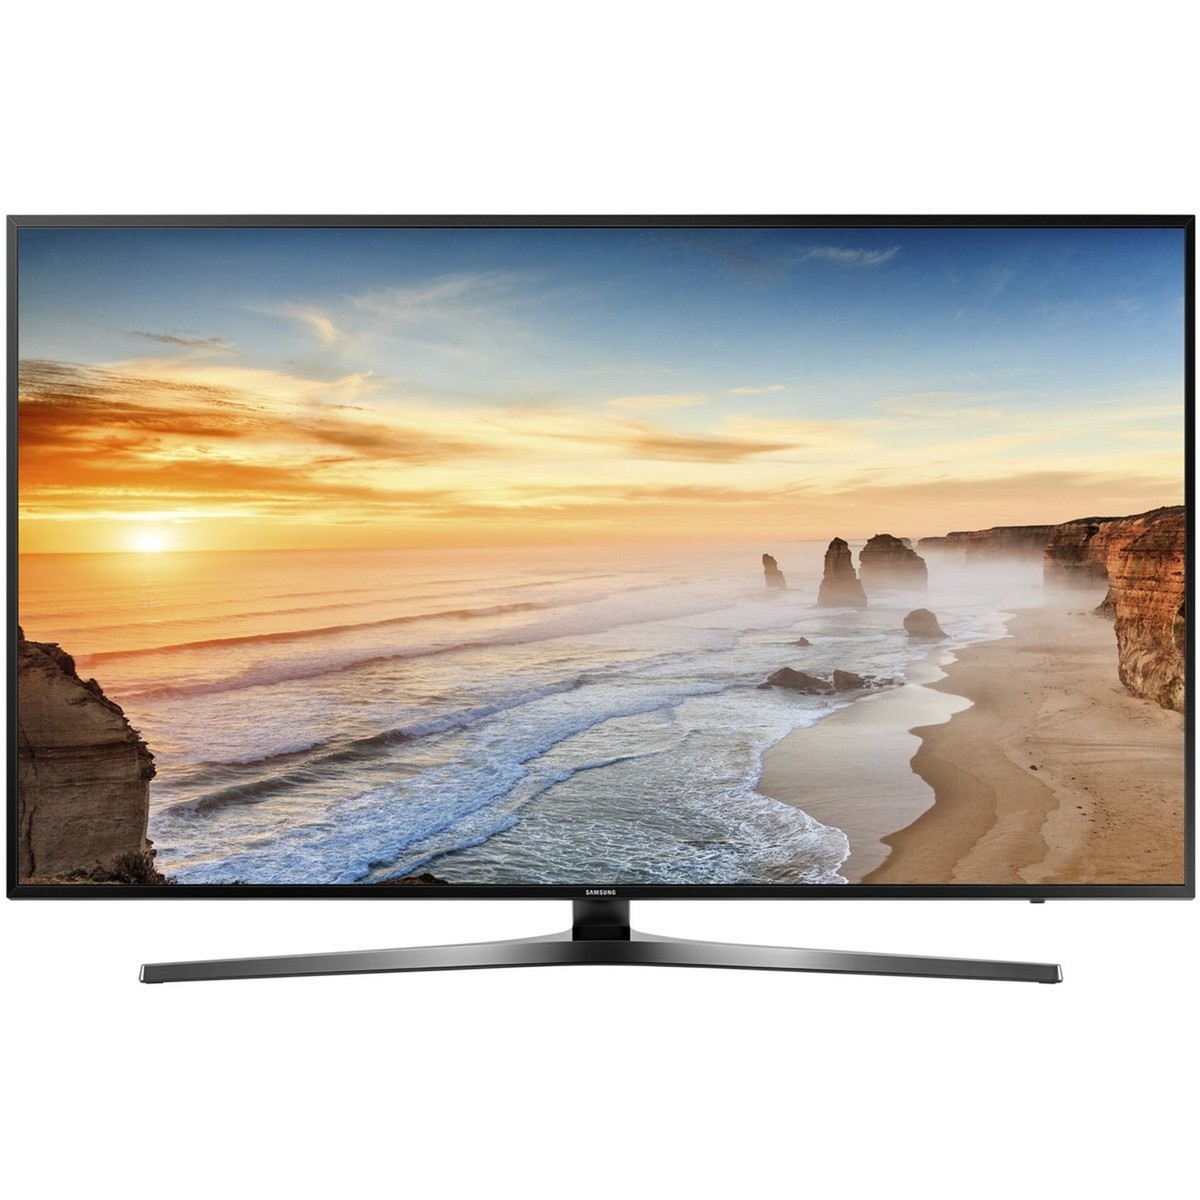 Samsung Ultra HDSmart LED TV UA65KU7000 65inch